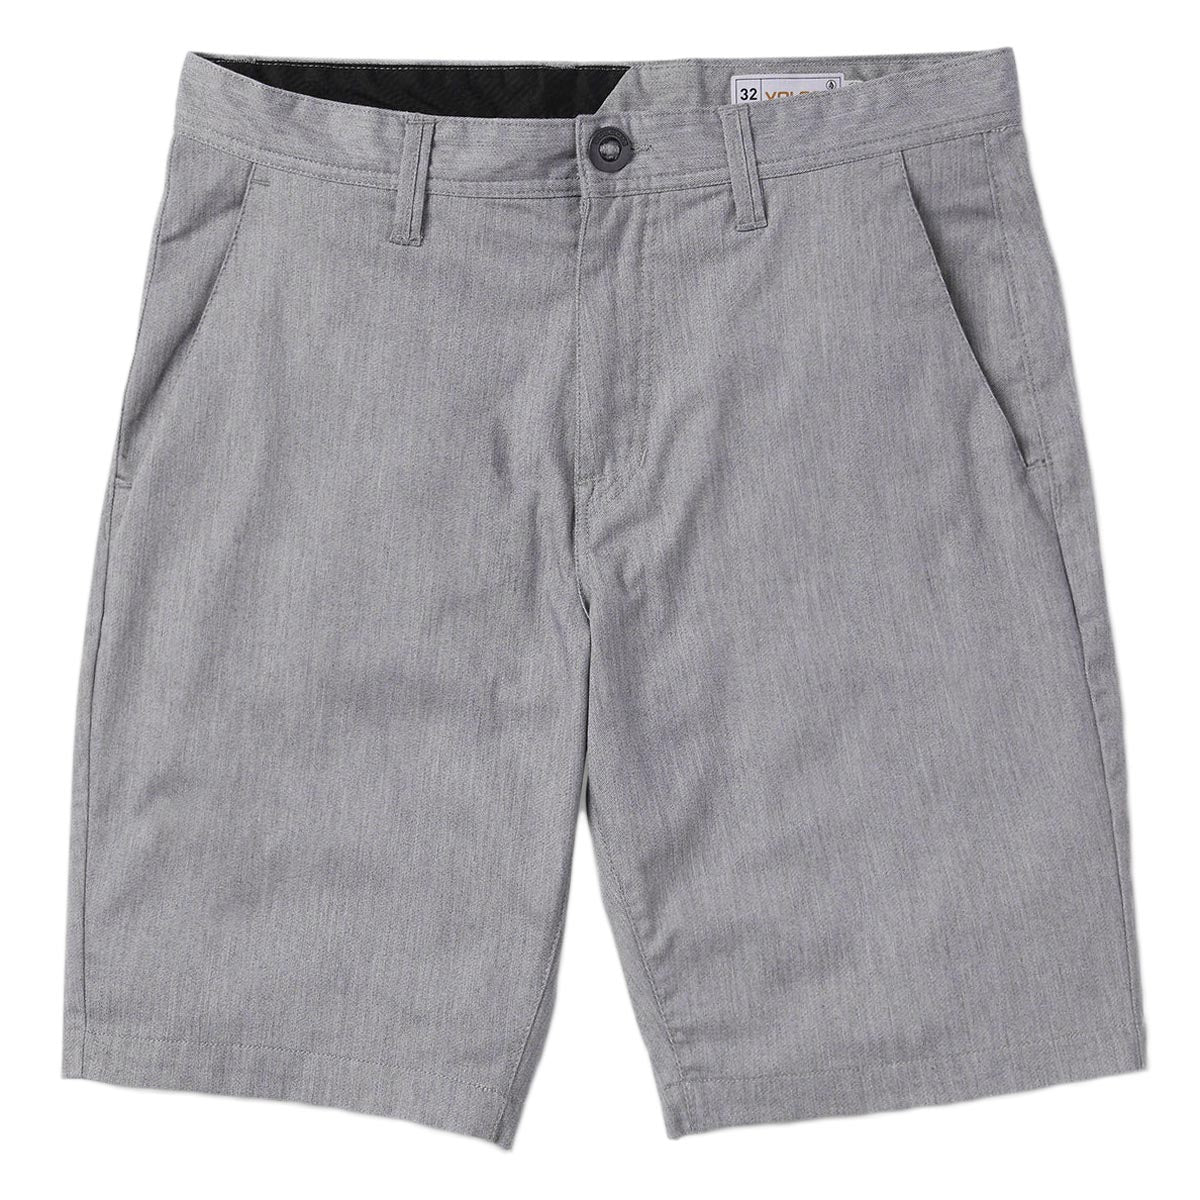 Volcom Frickin Modern Stretch 21 Shorts - Grey image 1